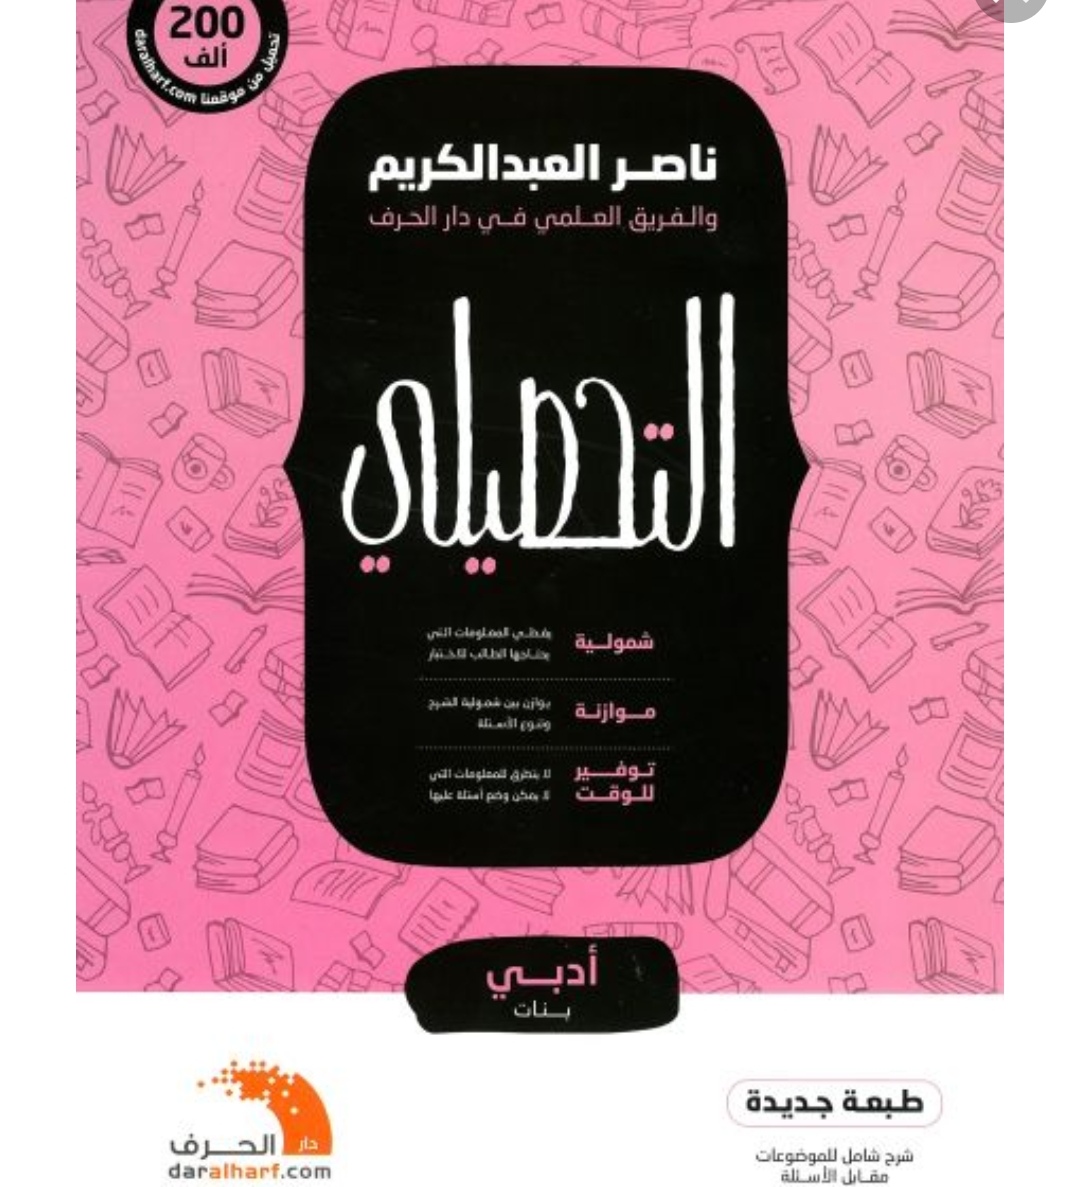 تحميل كتاب ناصر عبدالكريم للتحصيلي علمي pdf 2021